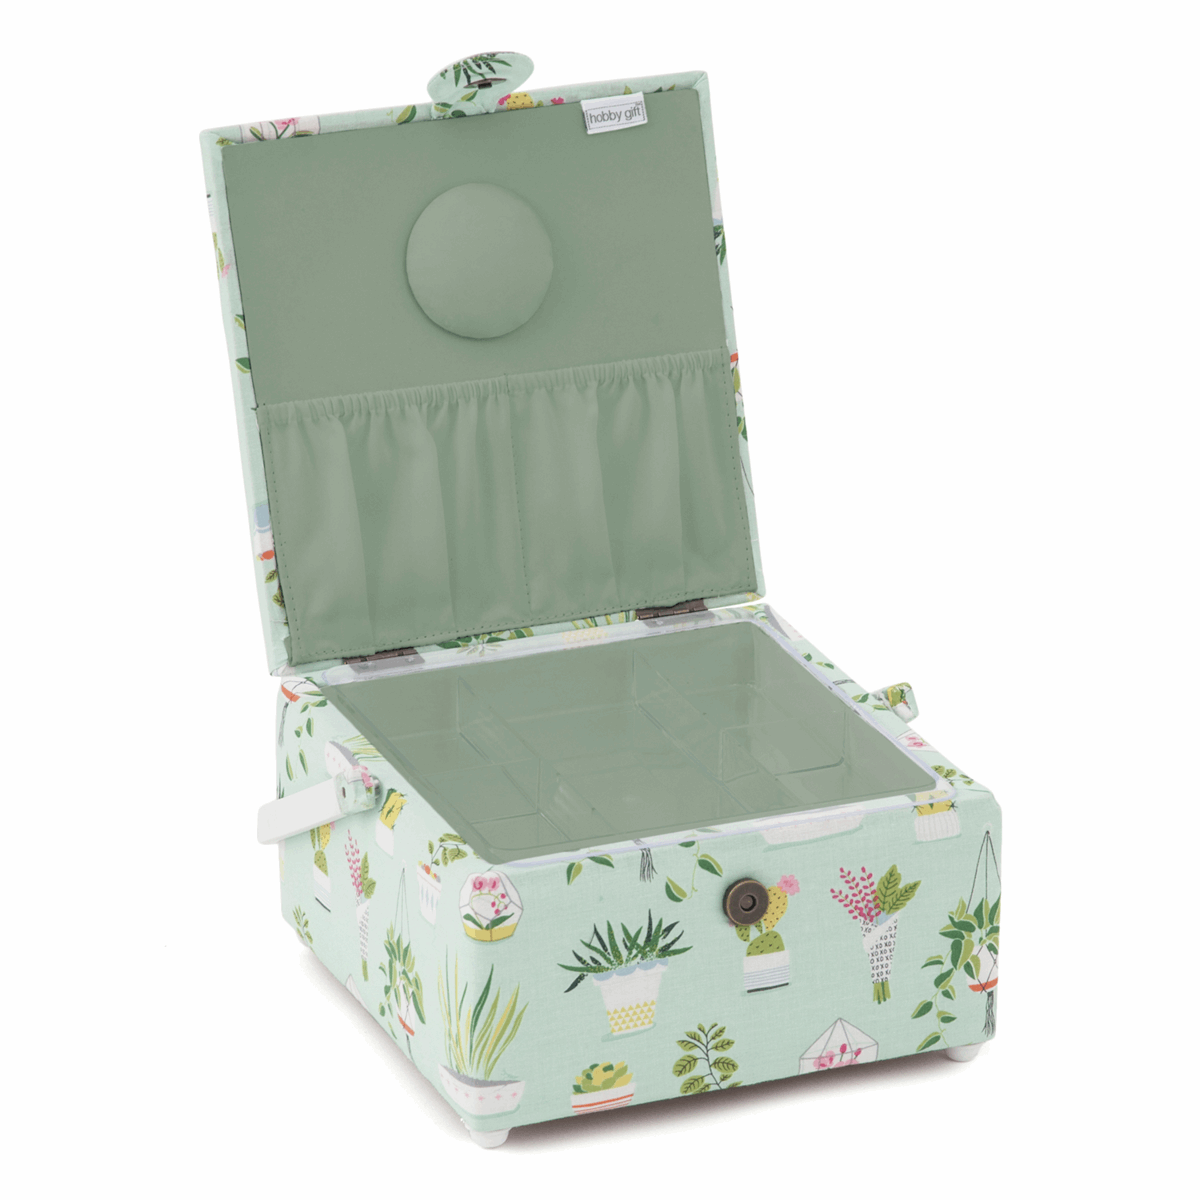 Plant Life Sewing Box - Medium